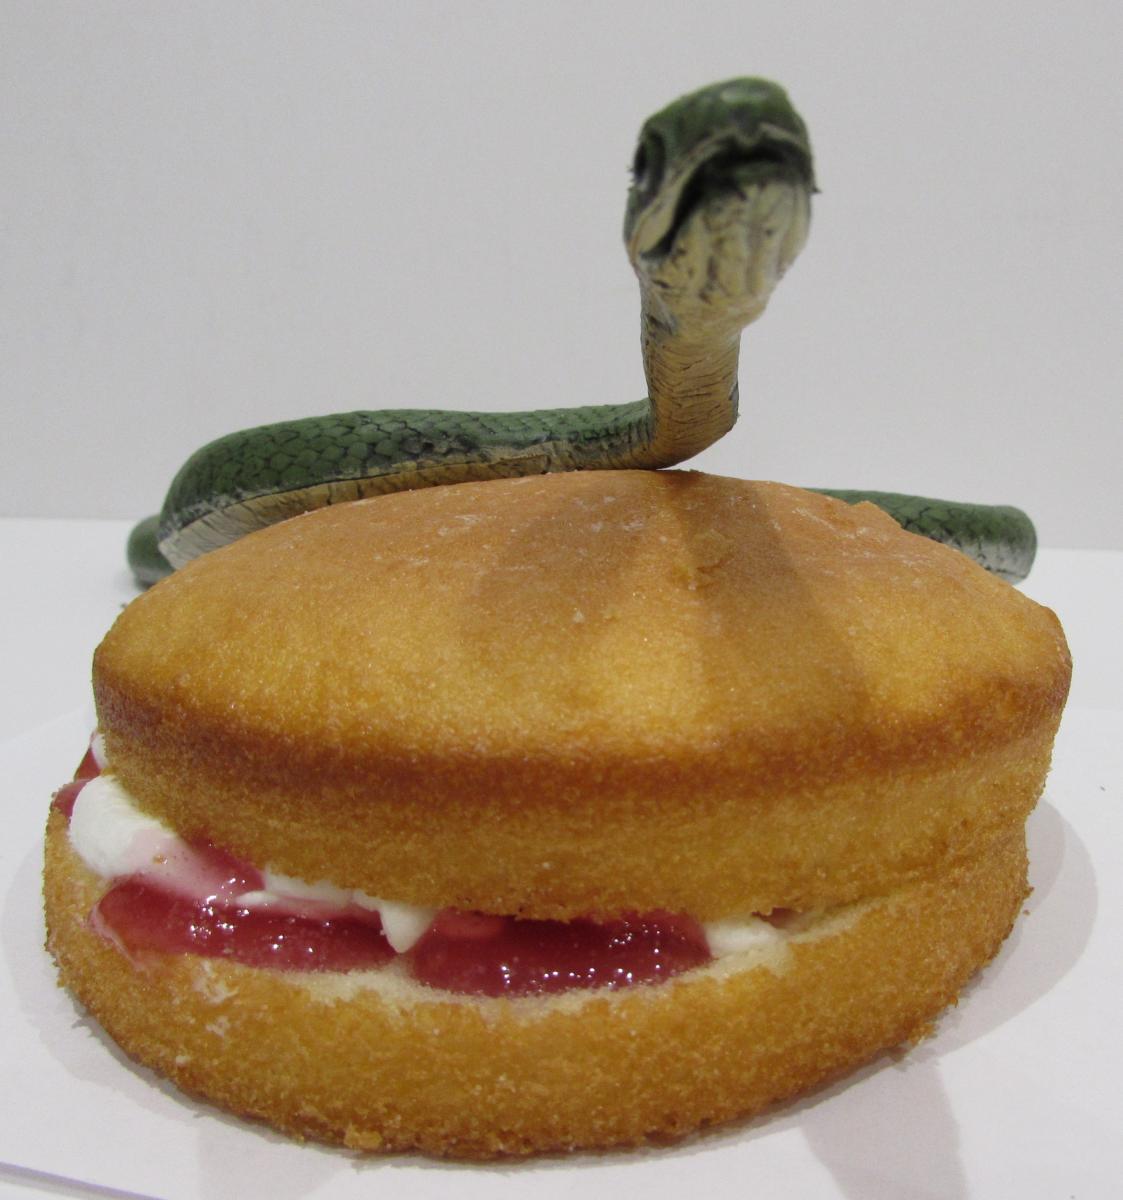 Snake on cake